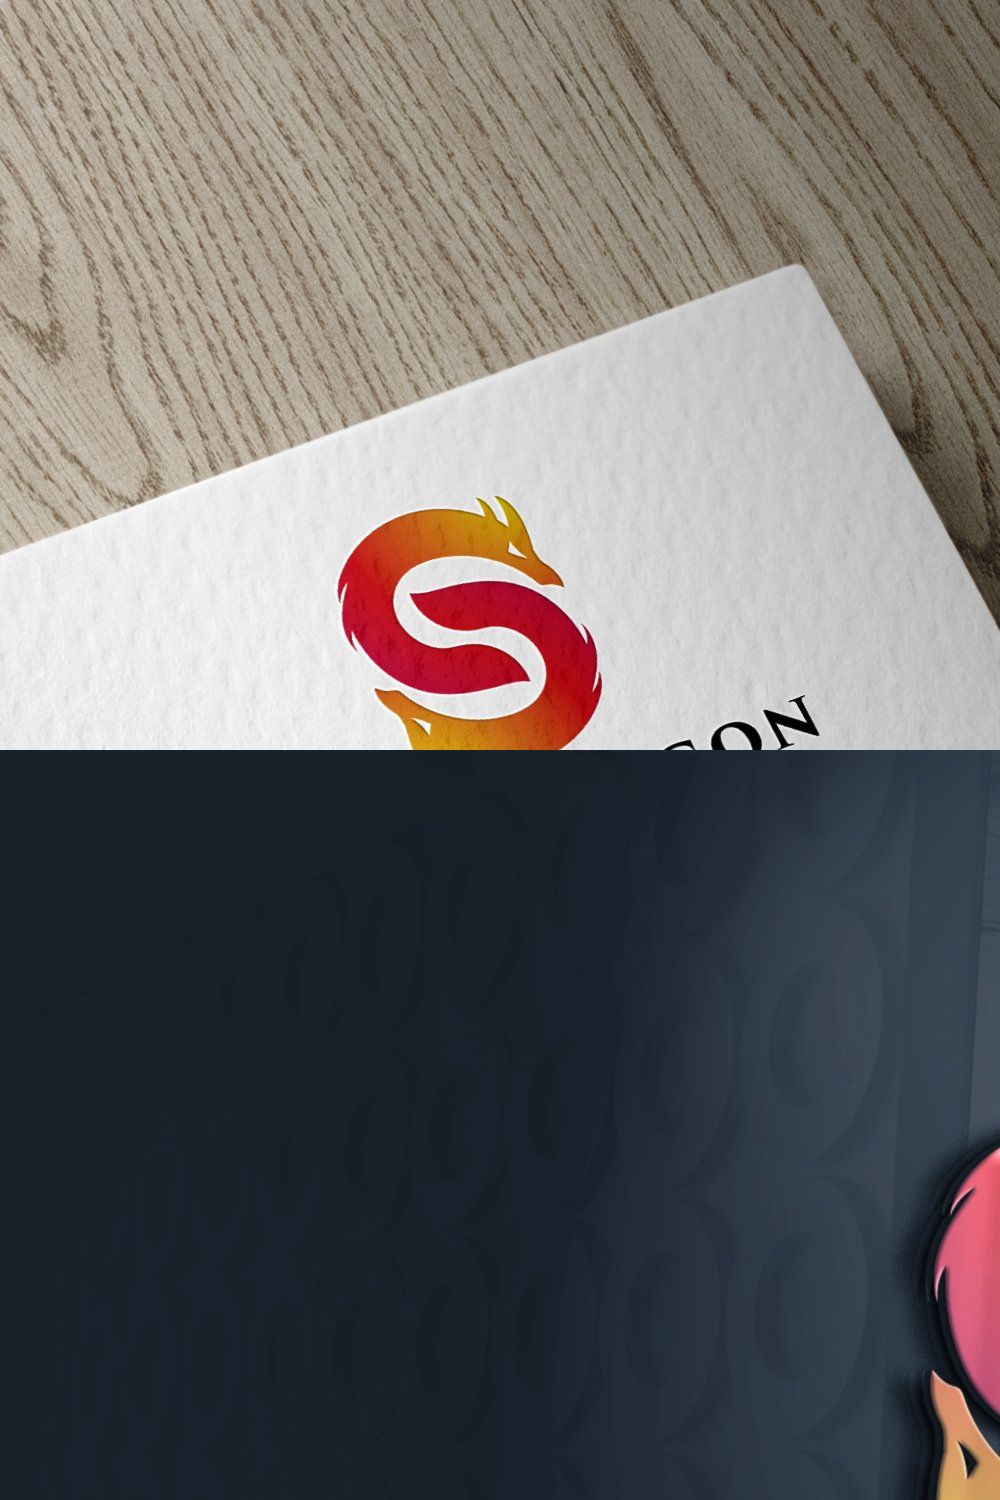 Super Dragon Letter S Logo pinterest preview image.